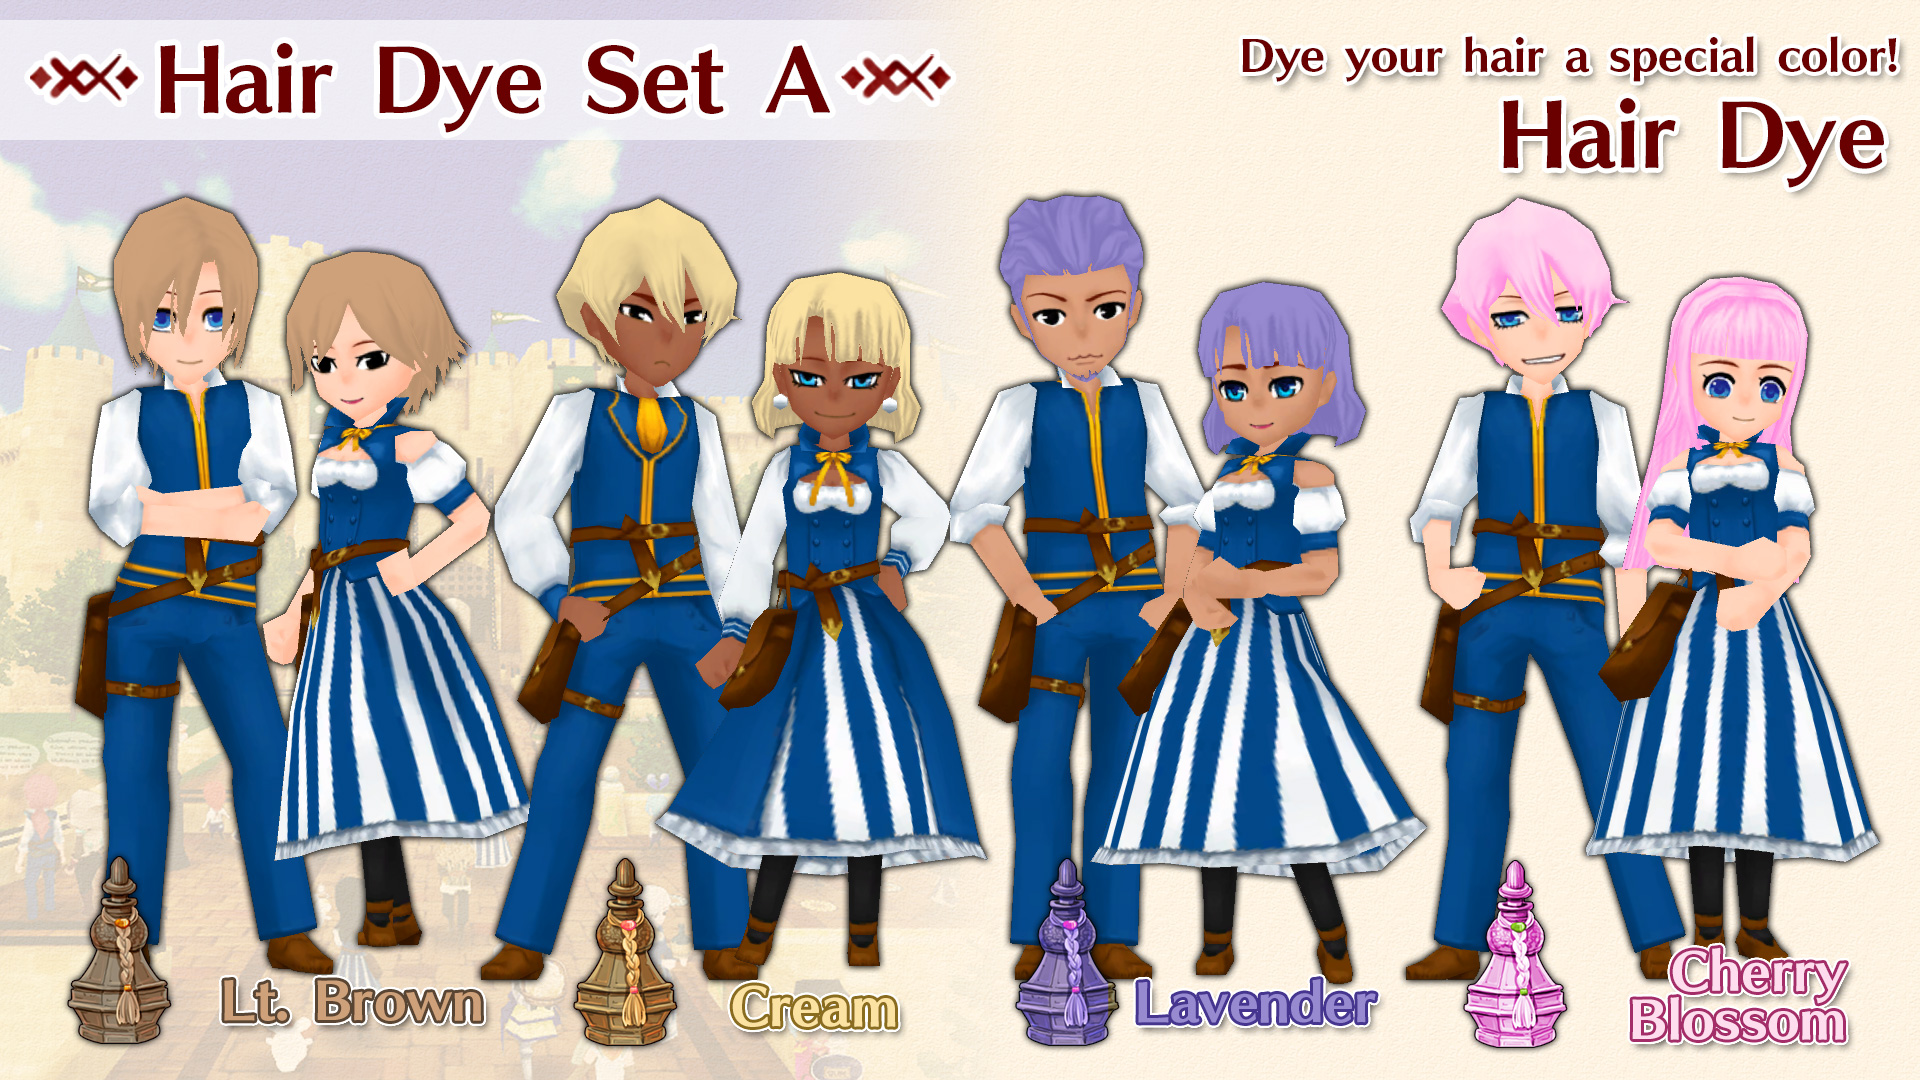 Hair Dye Set A ( Lt. Brown, Lavender, Cream, Cherry Blossom )